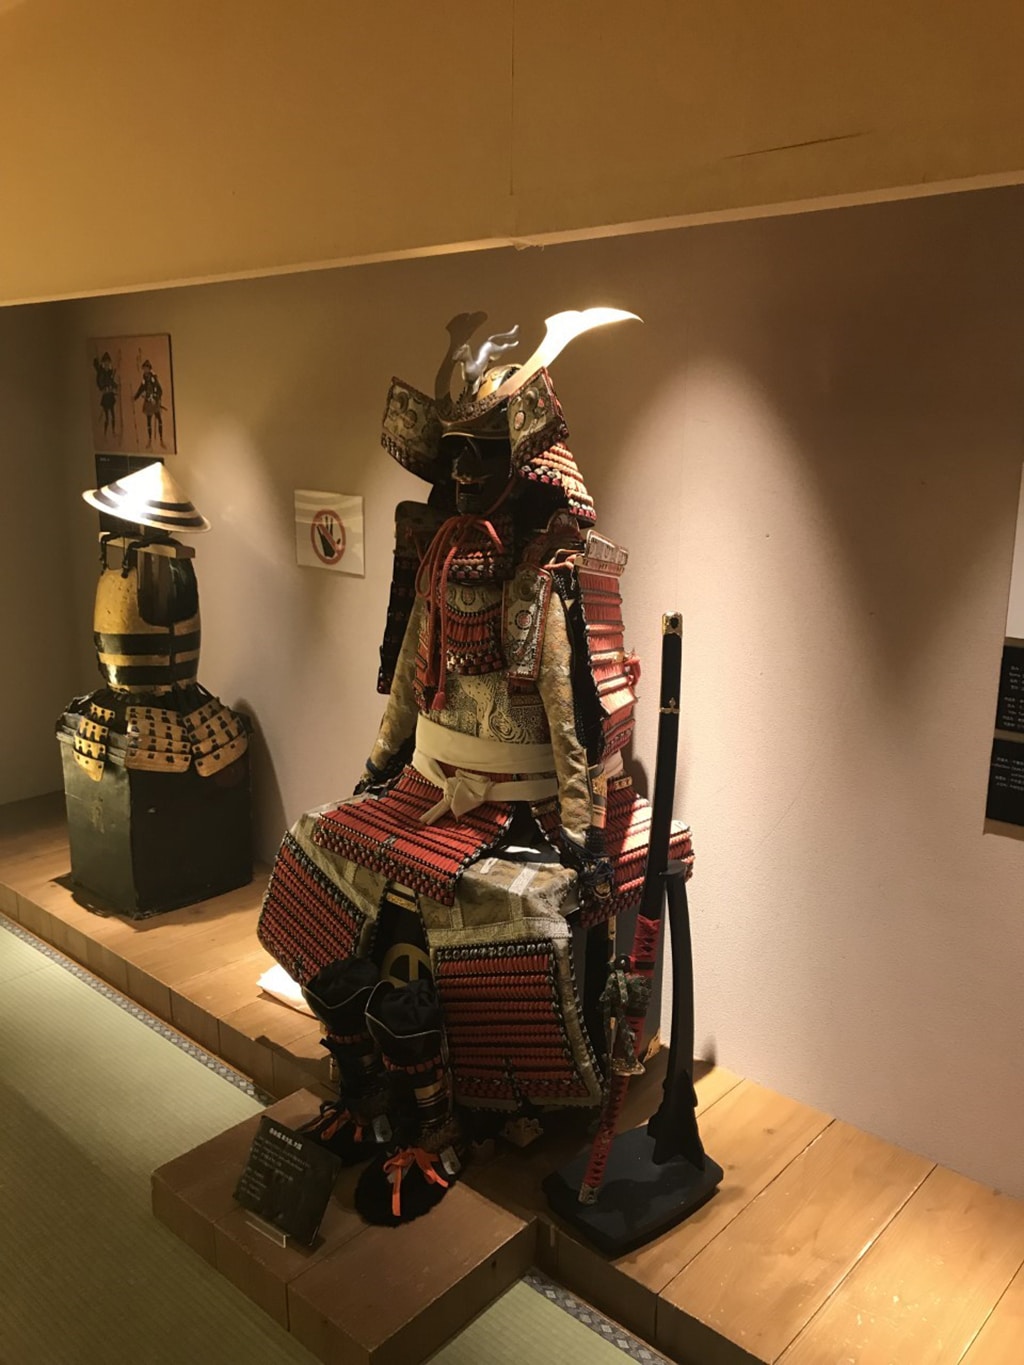 Samurai armor on display